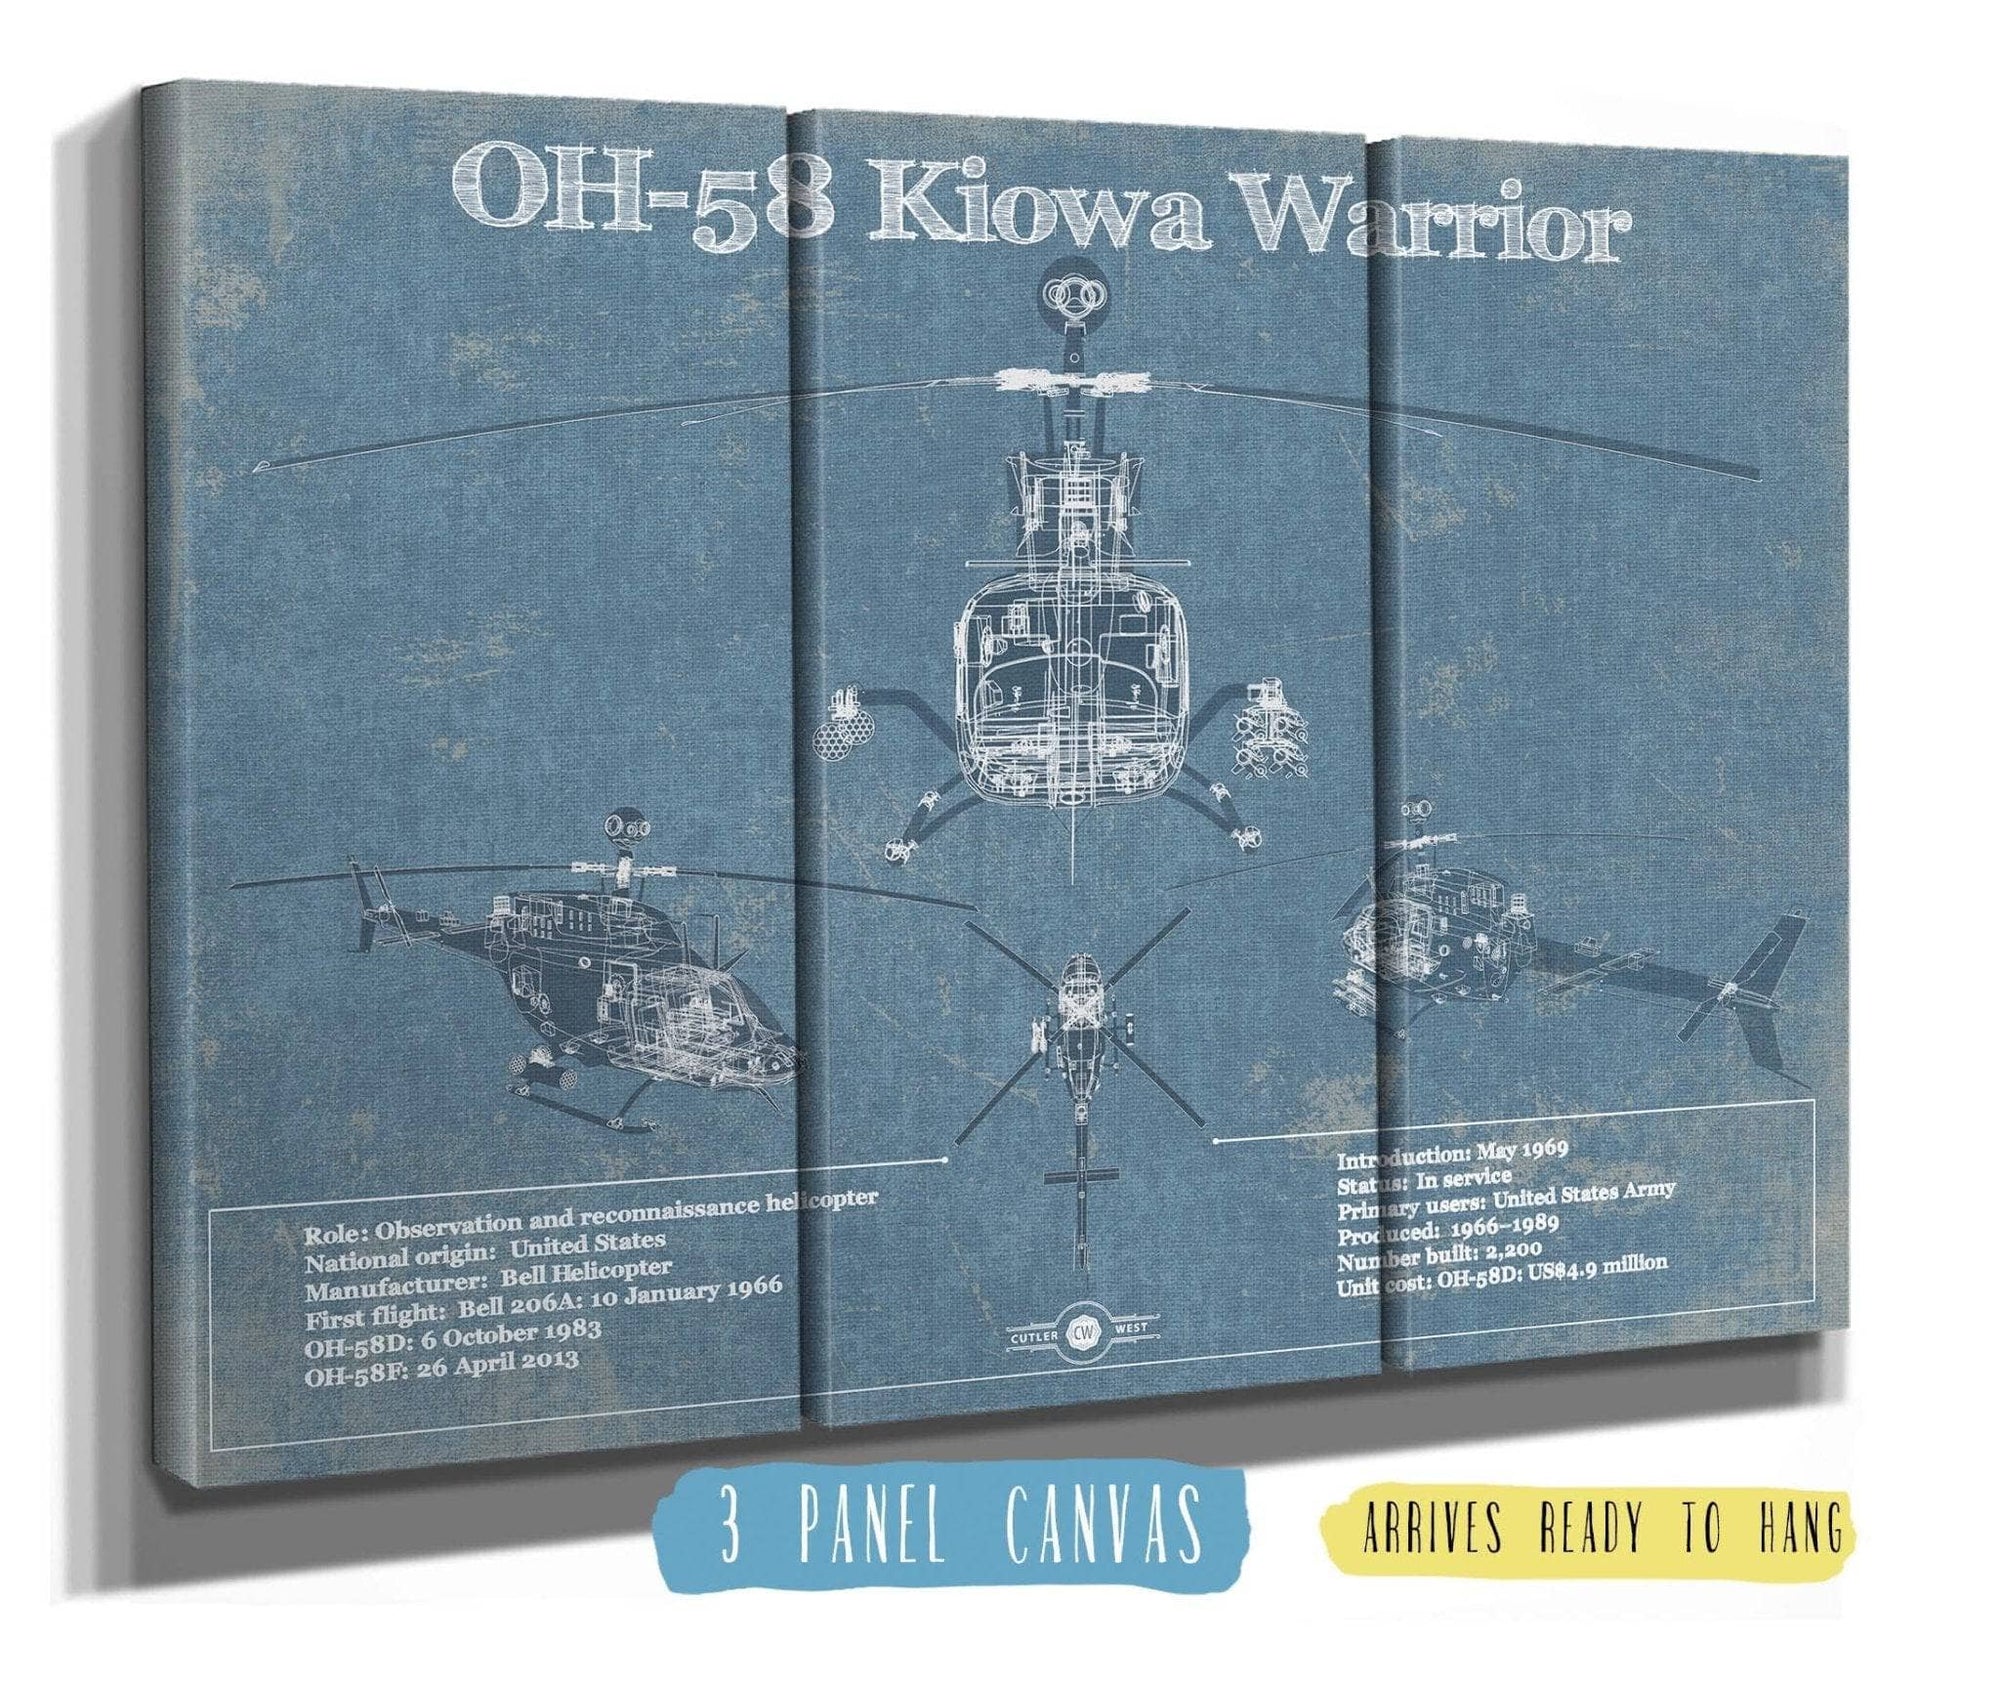 Cutler West Military Aircraft OH-58 Kiowa Warrior Helicopter Vintage Aviation Blueprint Military Print